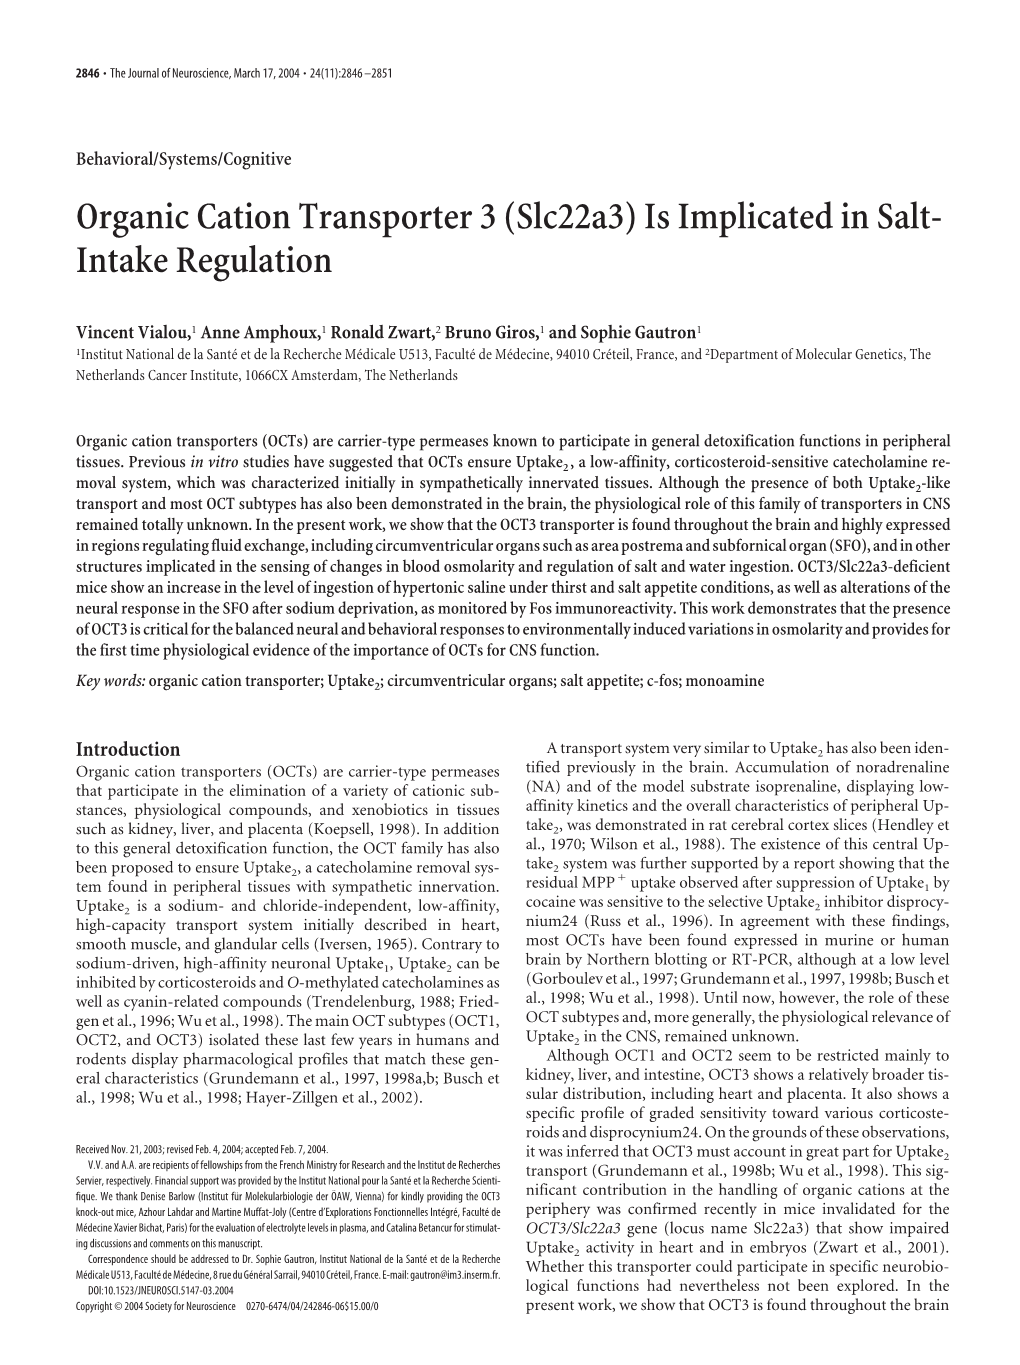 Organic Cation Transporter 3 (Slc22a3) Is Implicated in Salt- Intake Regulation